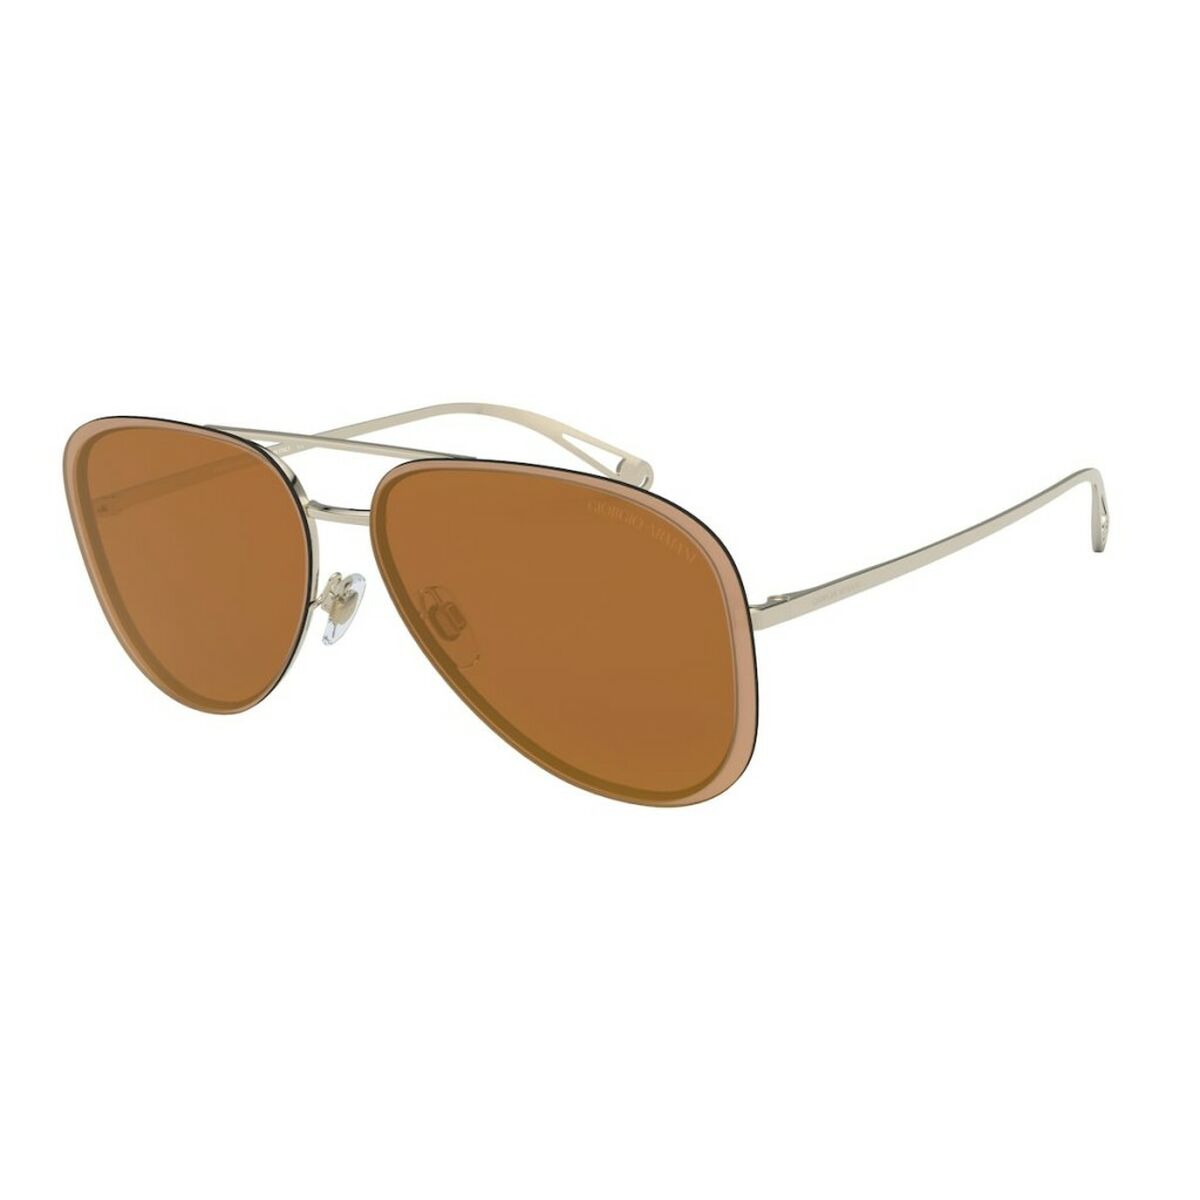 Men's Sunglasses Armani AR6084-30136H